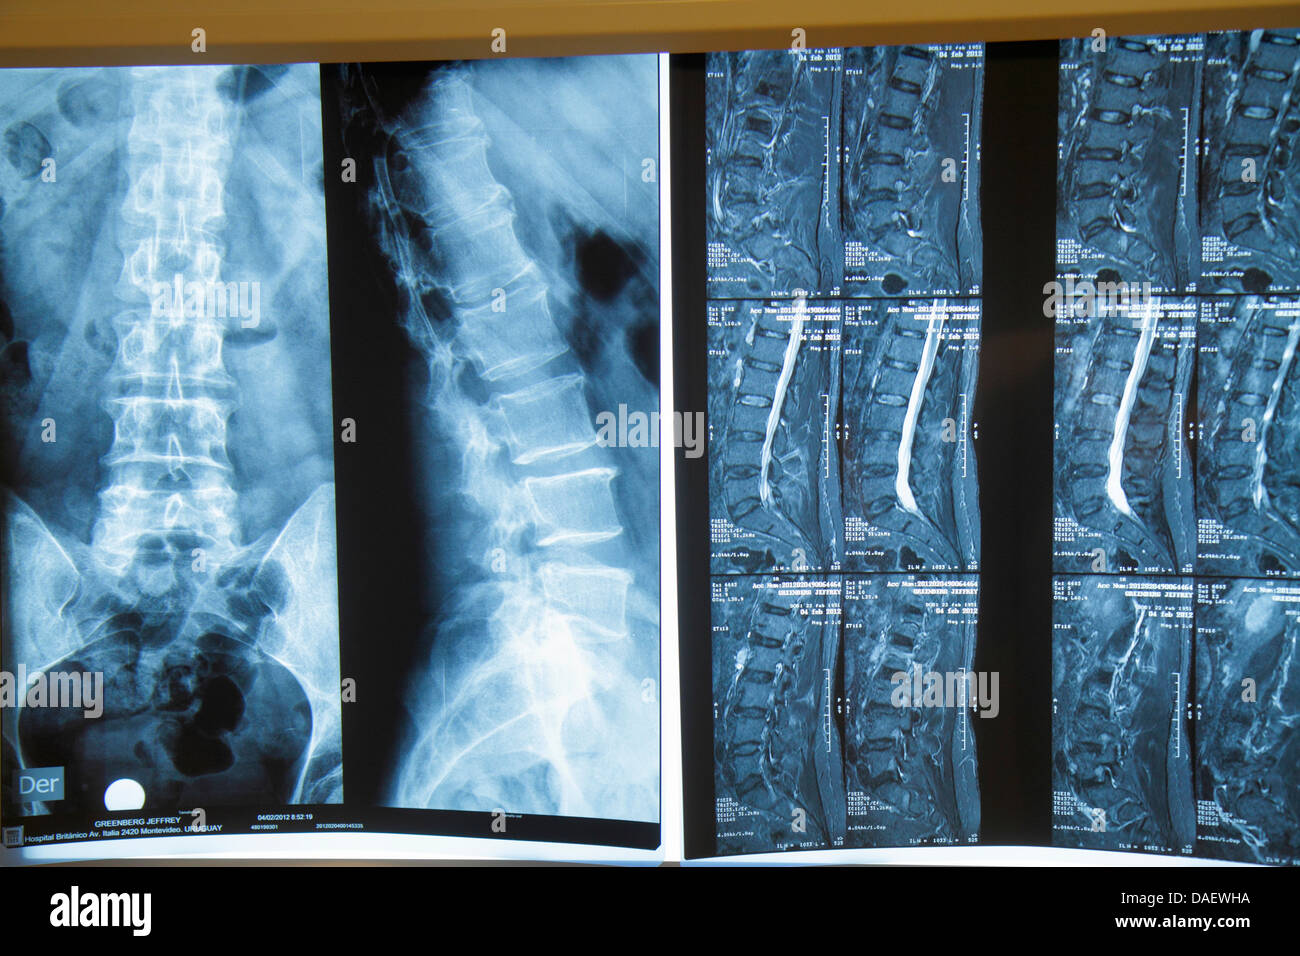 Miami Beach Florida,Mount Sinai Medical Center,centre,hospital,xray,x-ray,spinal column,slipped disc,rupture,FL130601008 Stock Photo